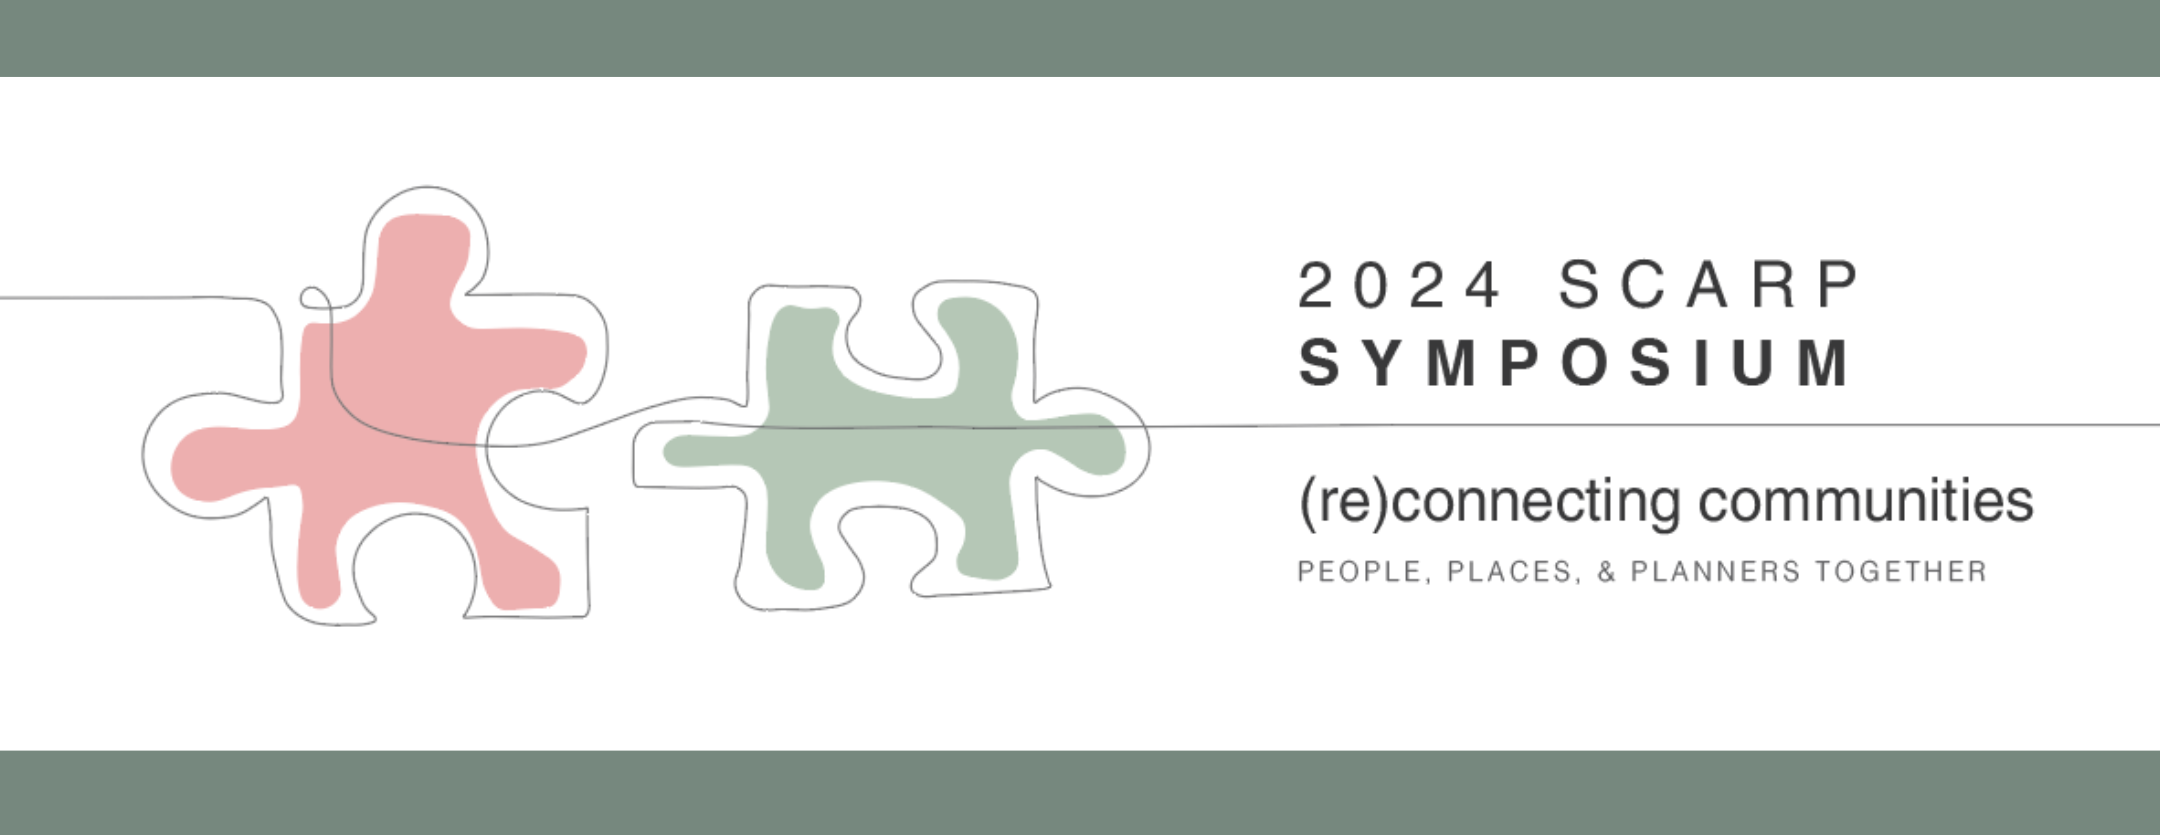 SCARP Symposium logo, showing 2 jigsaw puzzle pieces